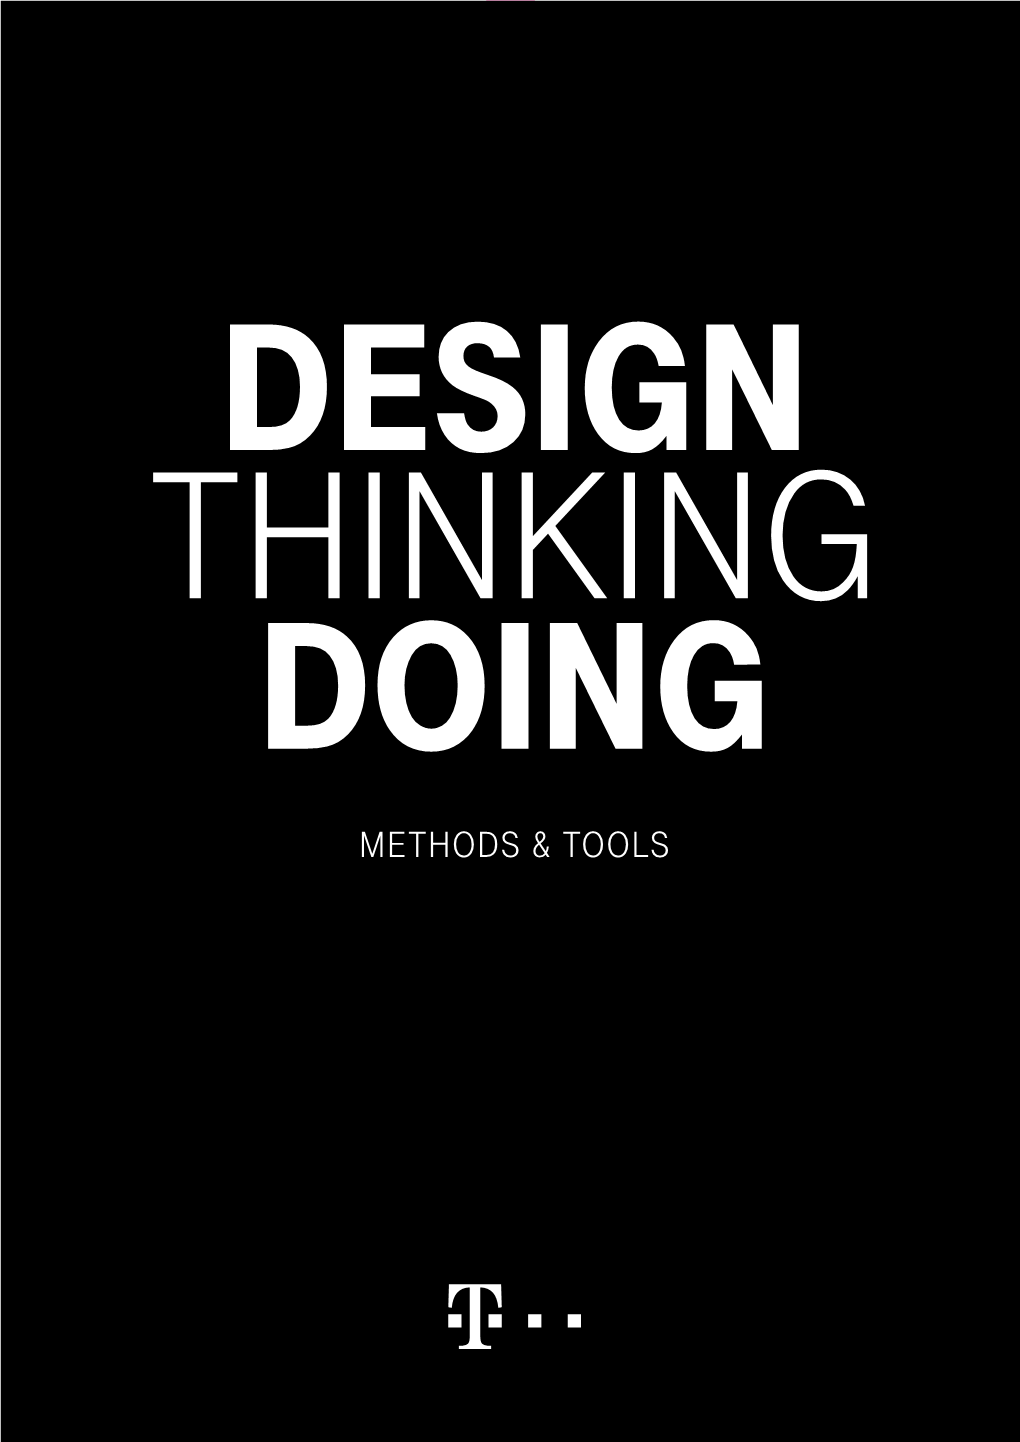 Design Thinking Doing Methods & Tools